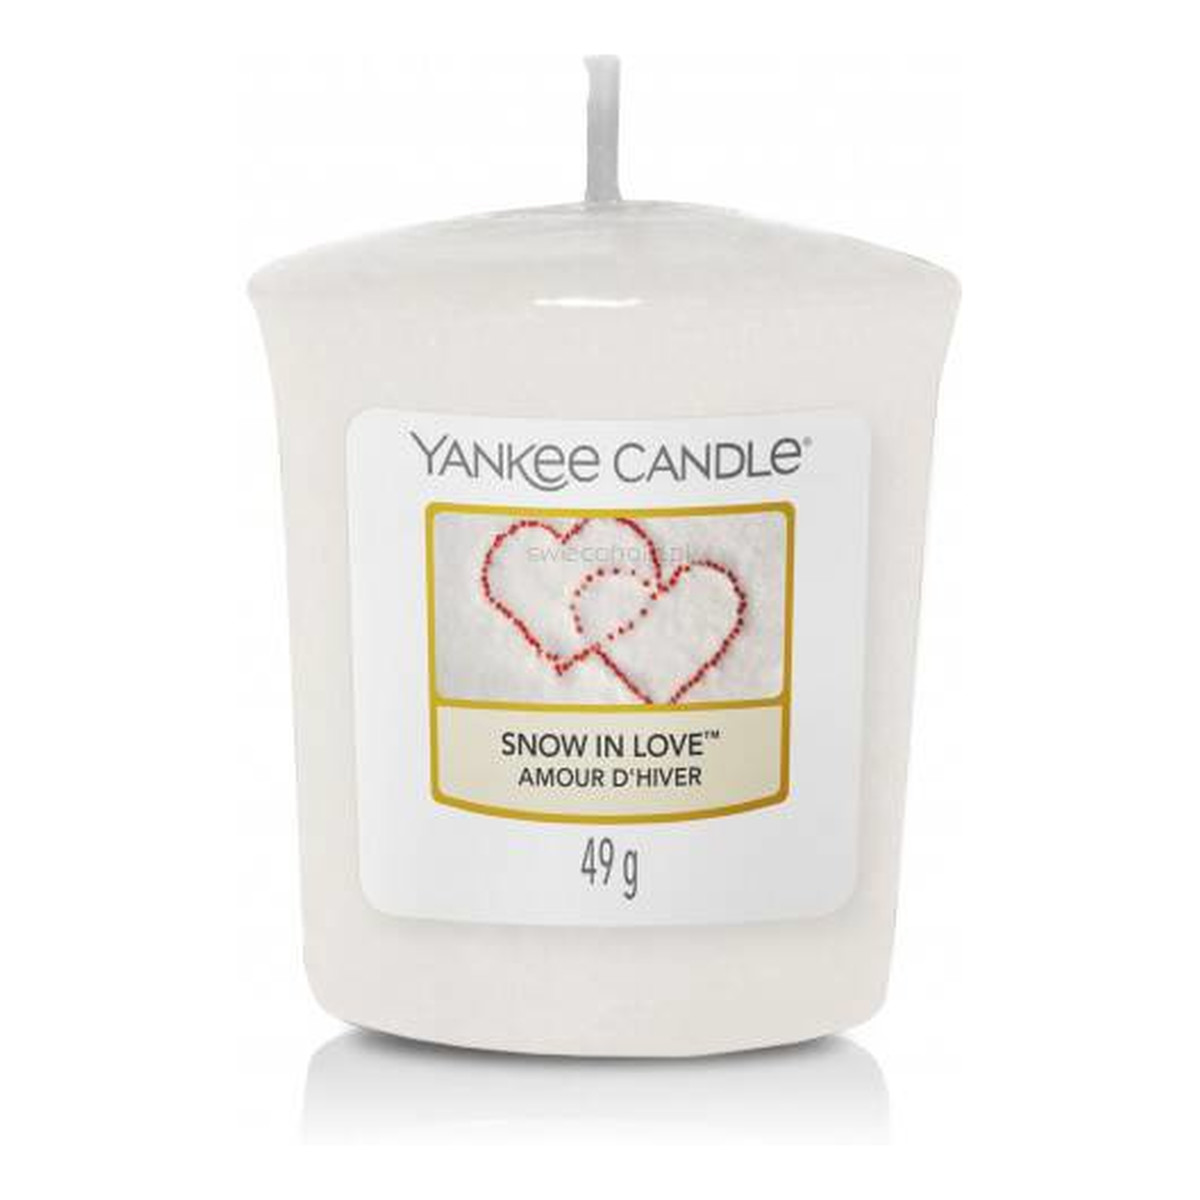 Yankee Candle Świeca zapachowa sampler snow in love 49g